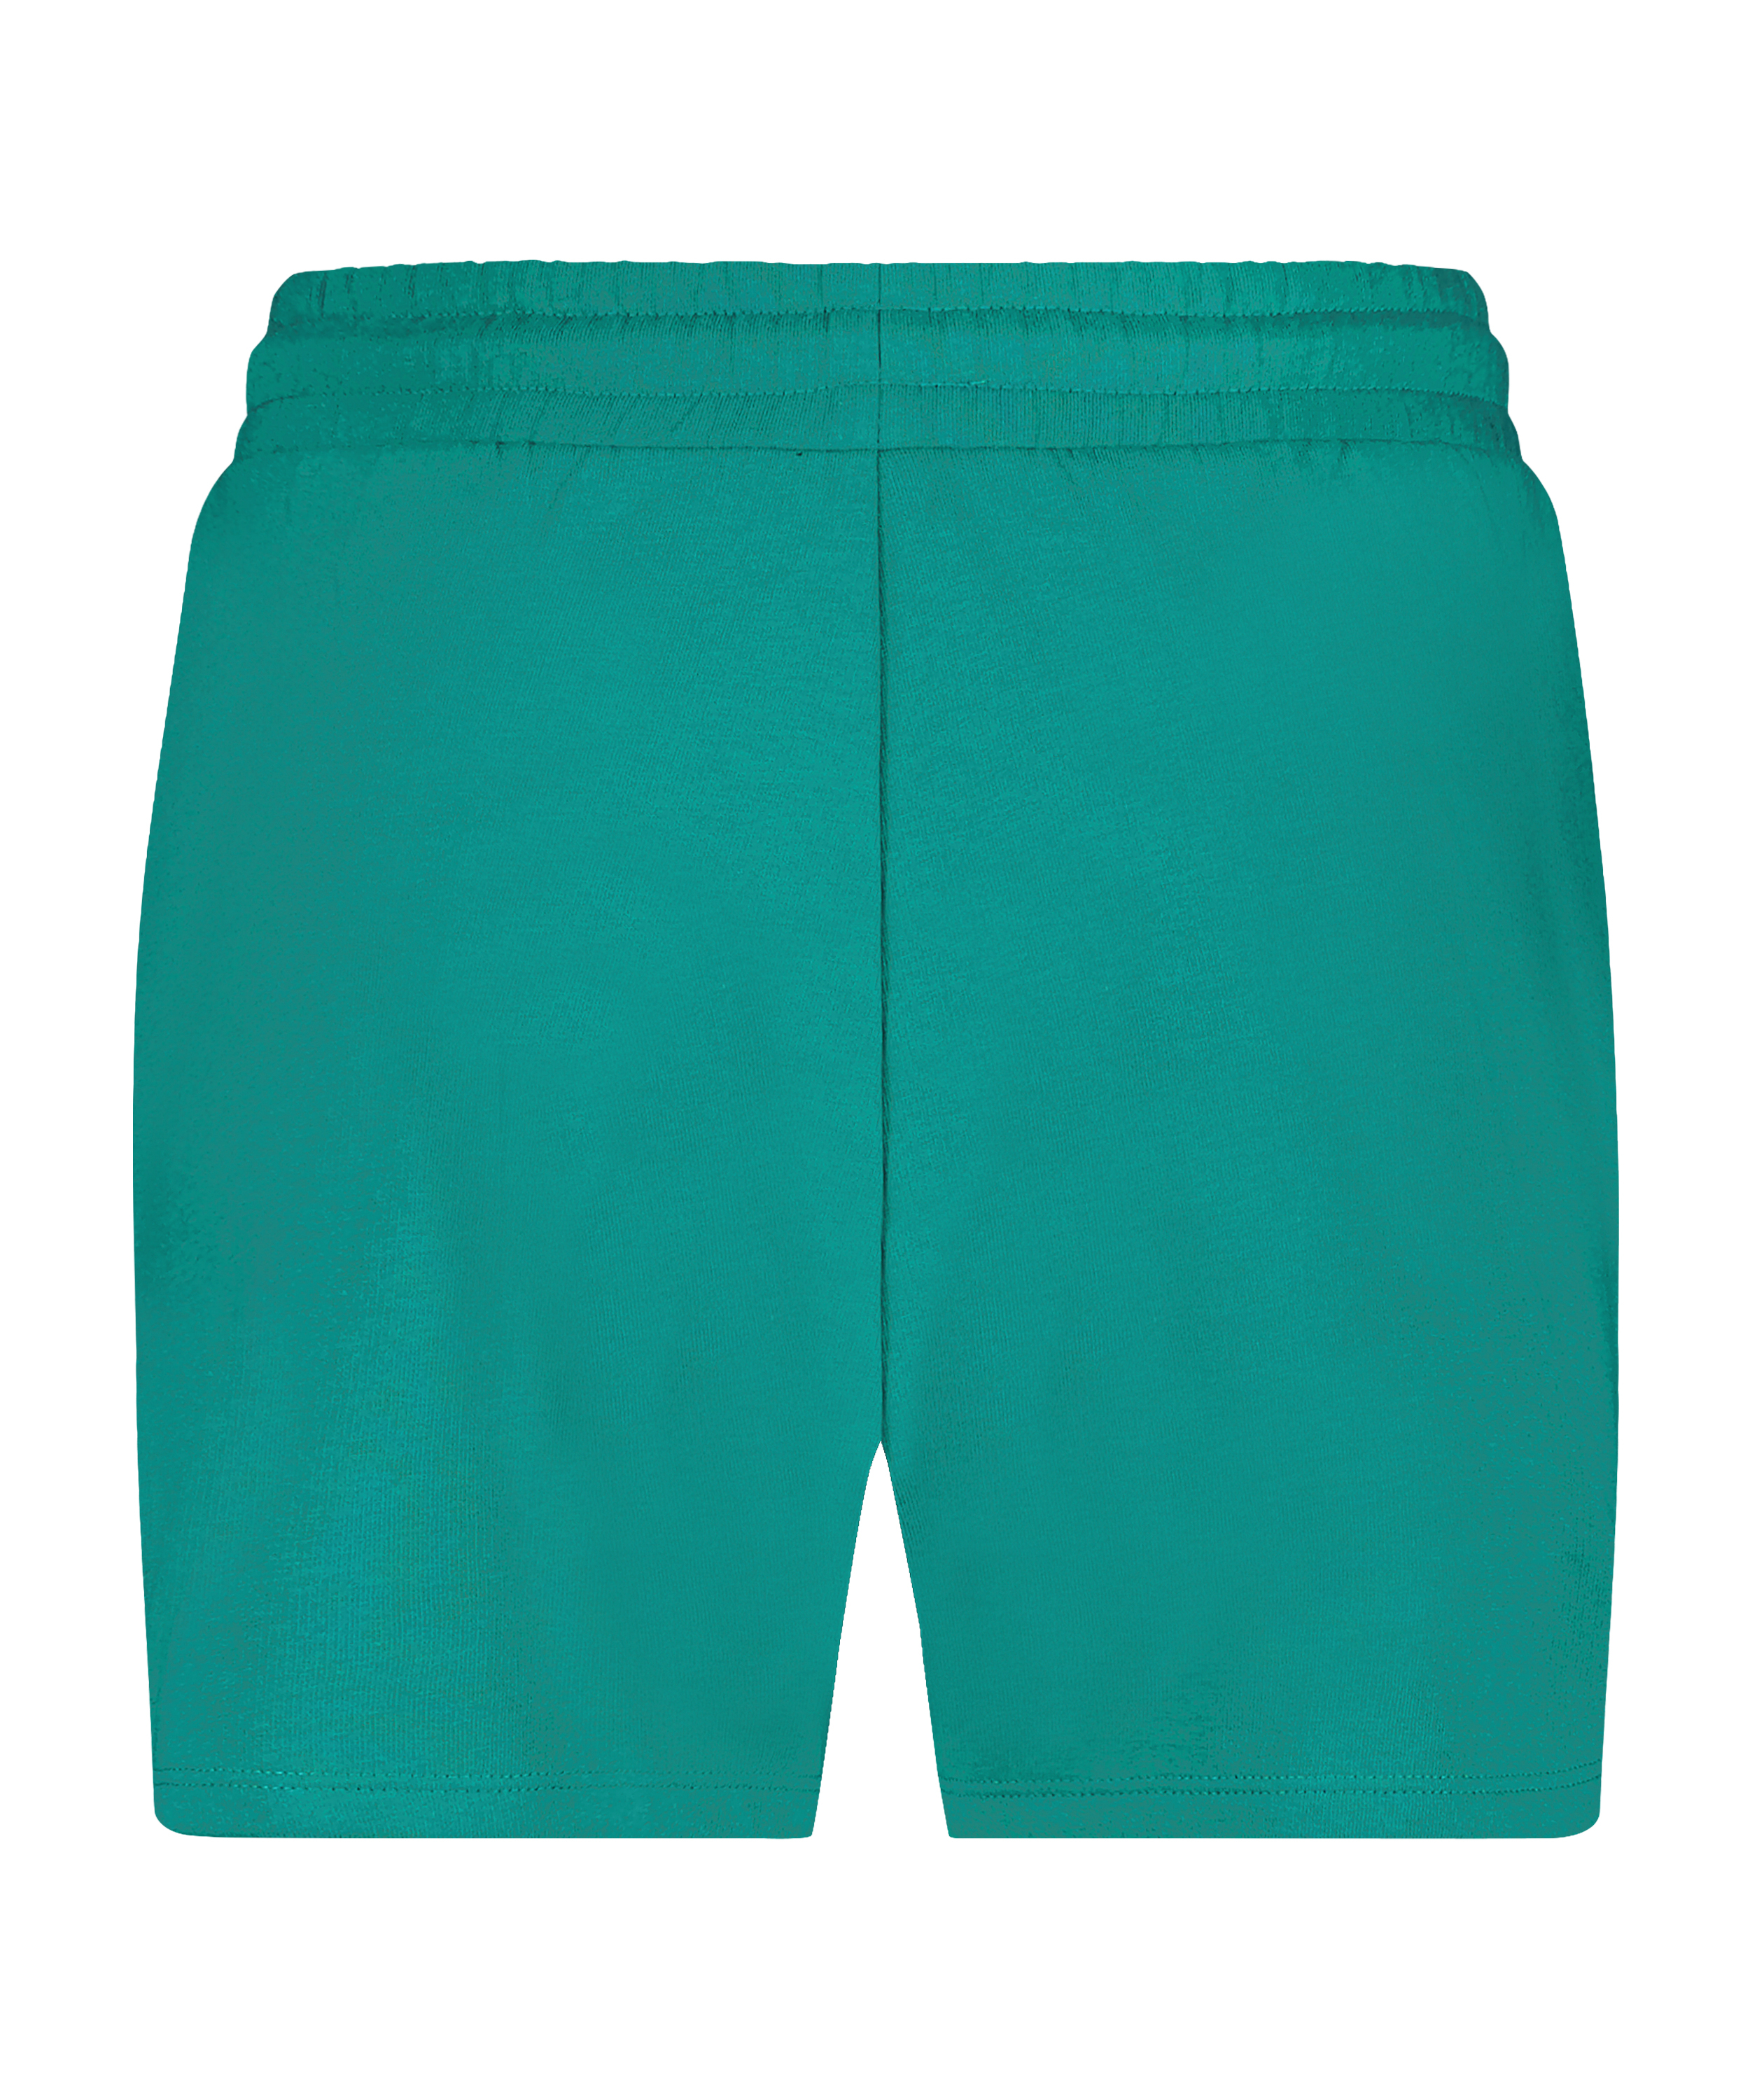 Pantalón corto Sweat, Verde, main